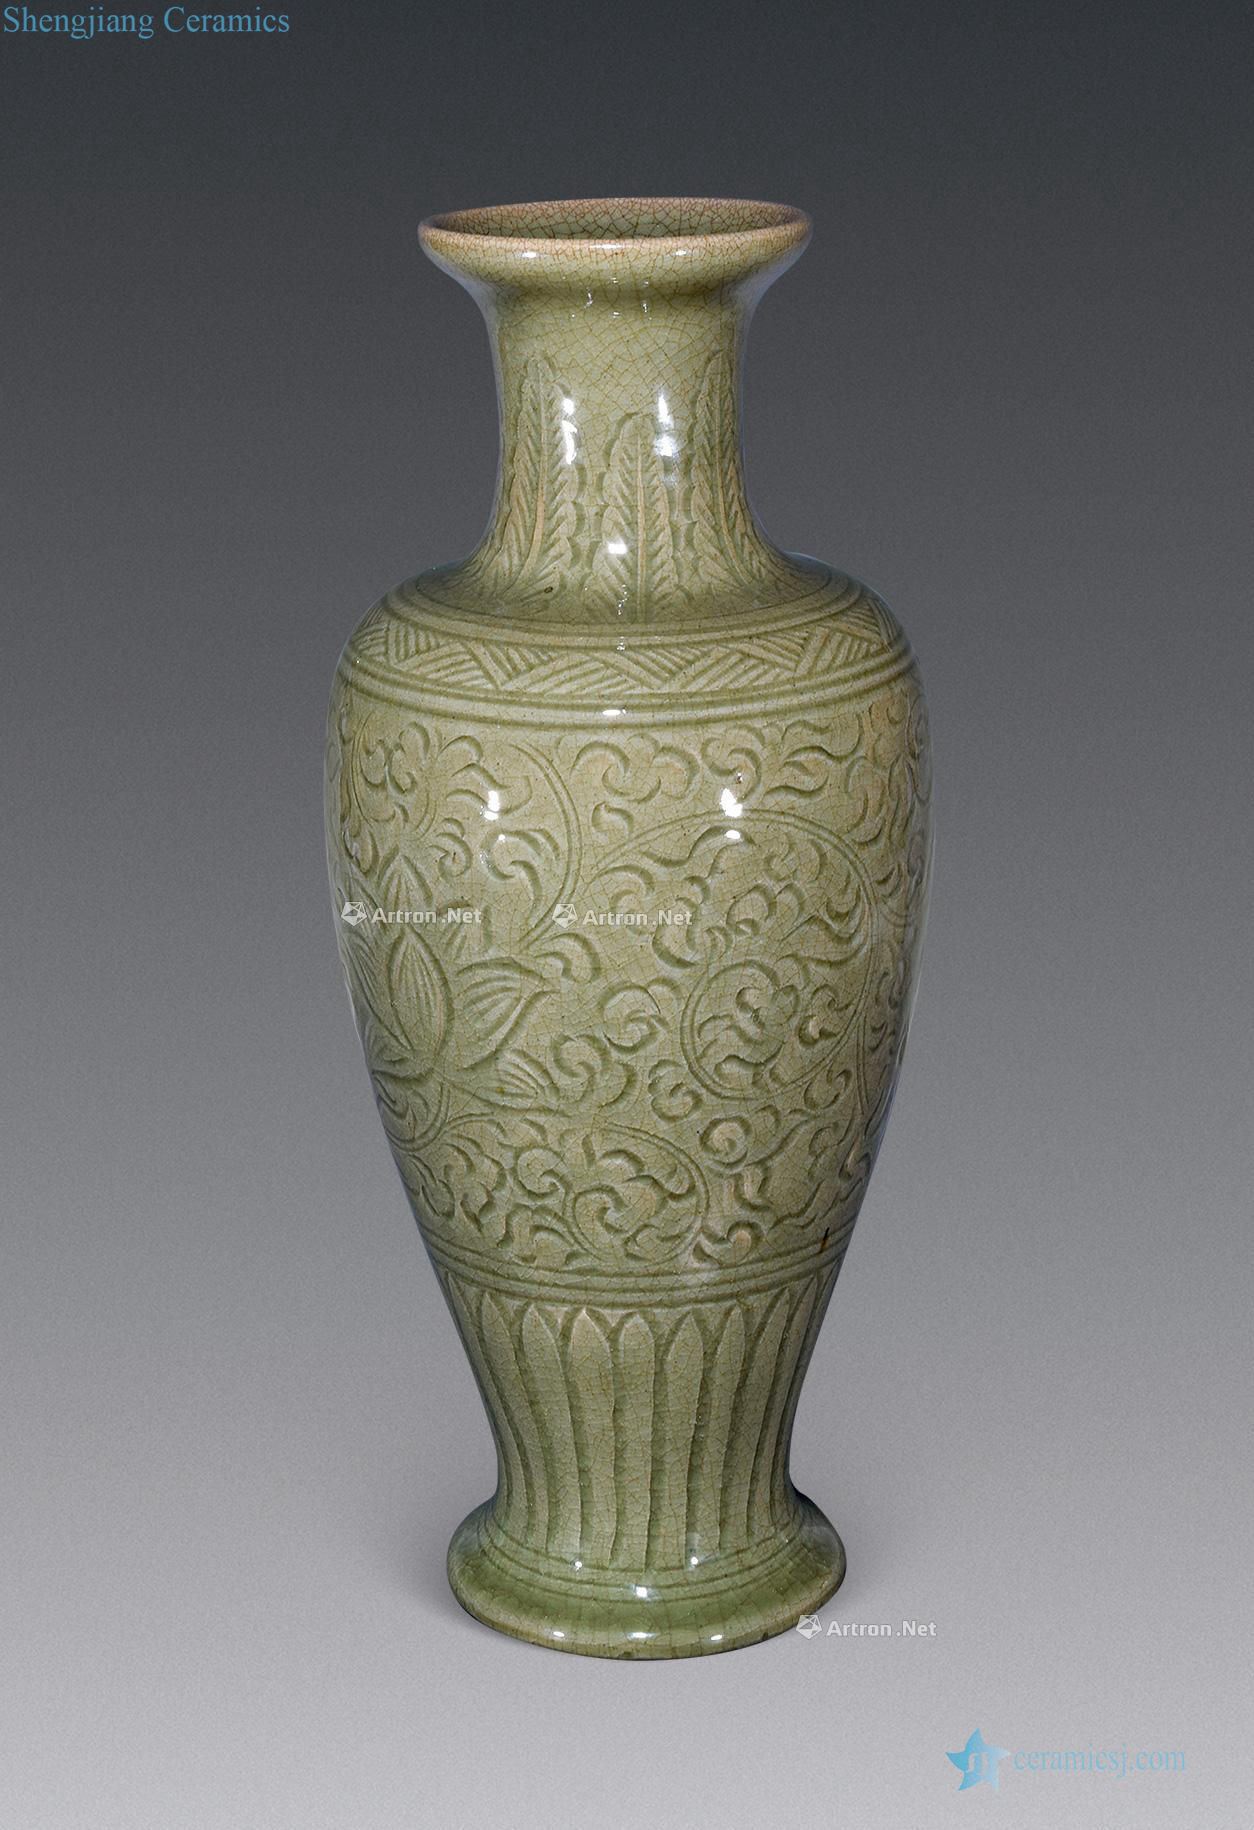 The song dynasty Yao state kiln carved decorative pattern bottle (return)